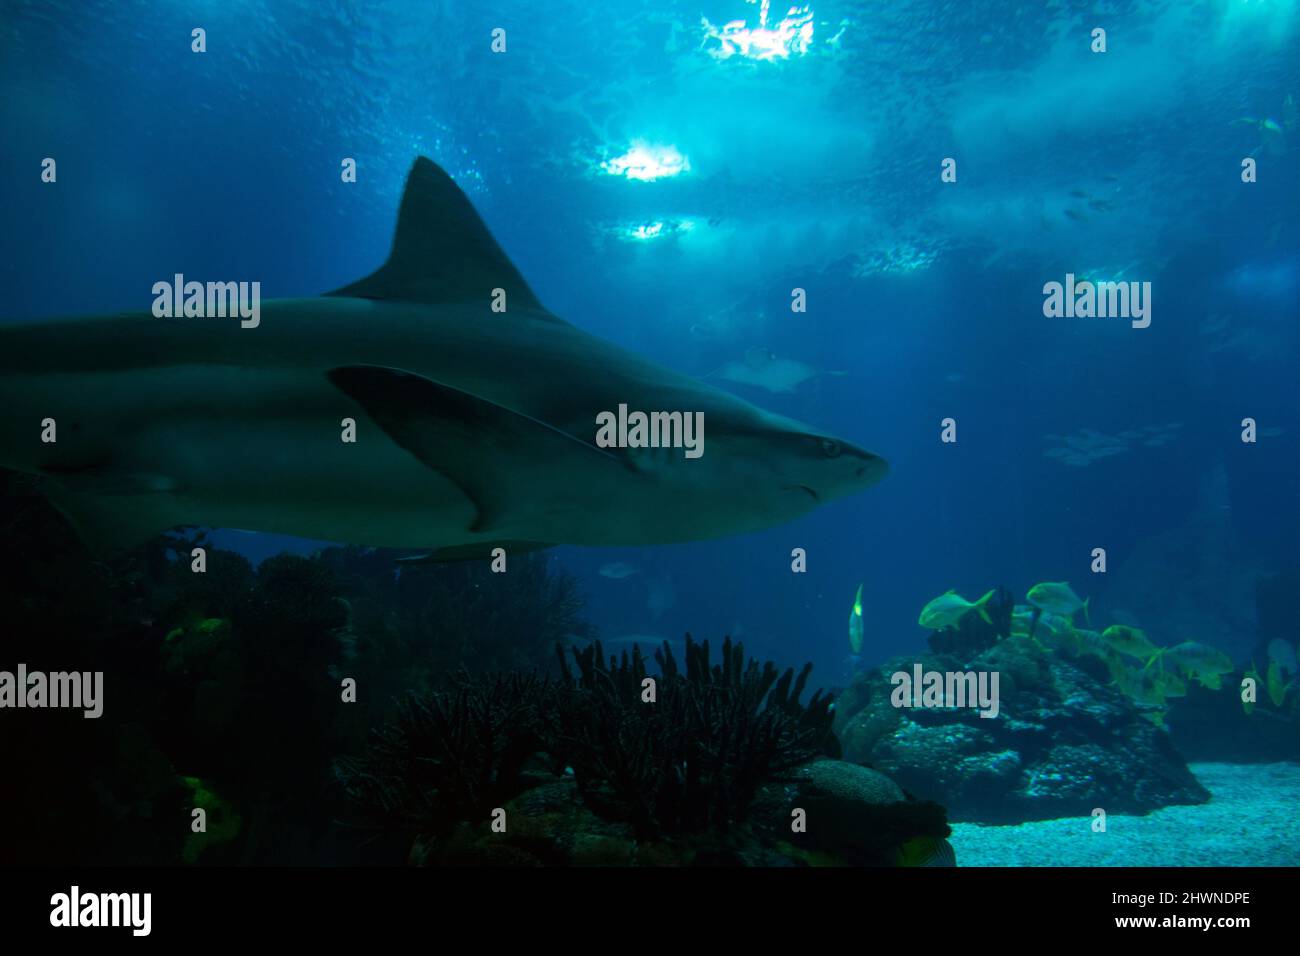 Shark cruising underwater at lisbon aquarium, oceanário de Lisboa. Shark fins, dorsal fin. Stock Photo